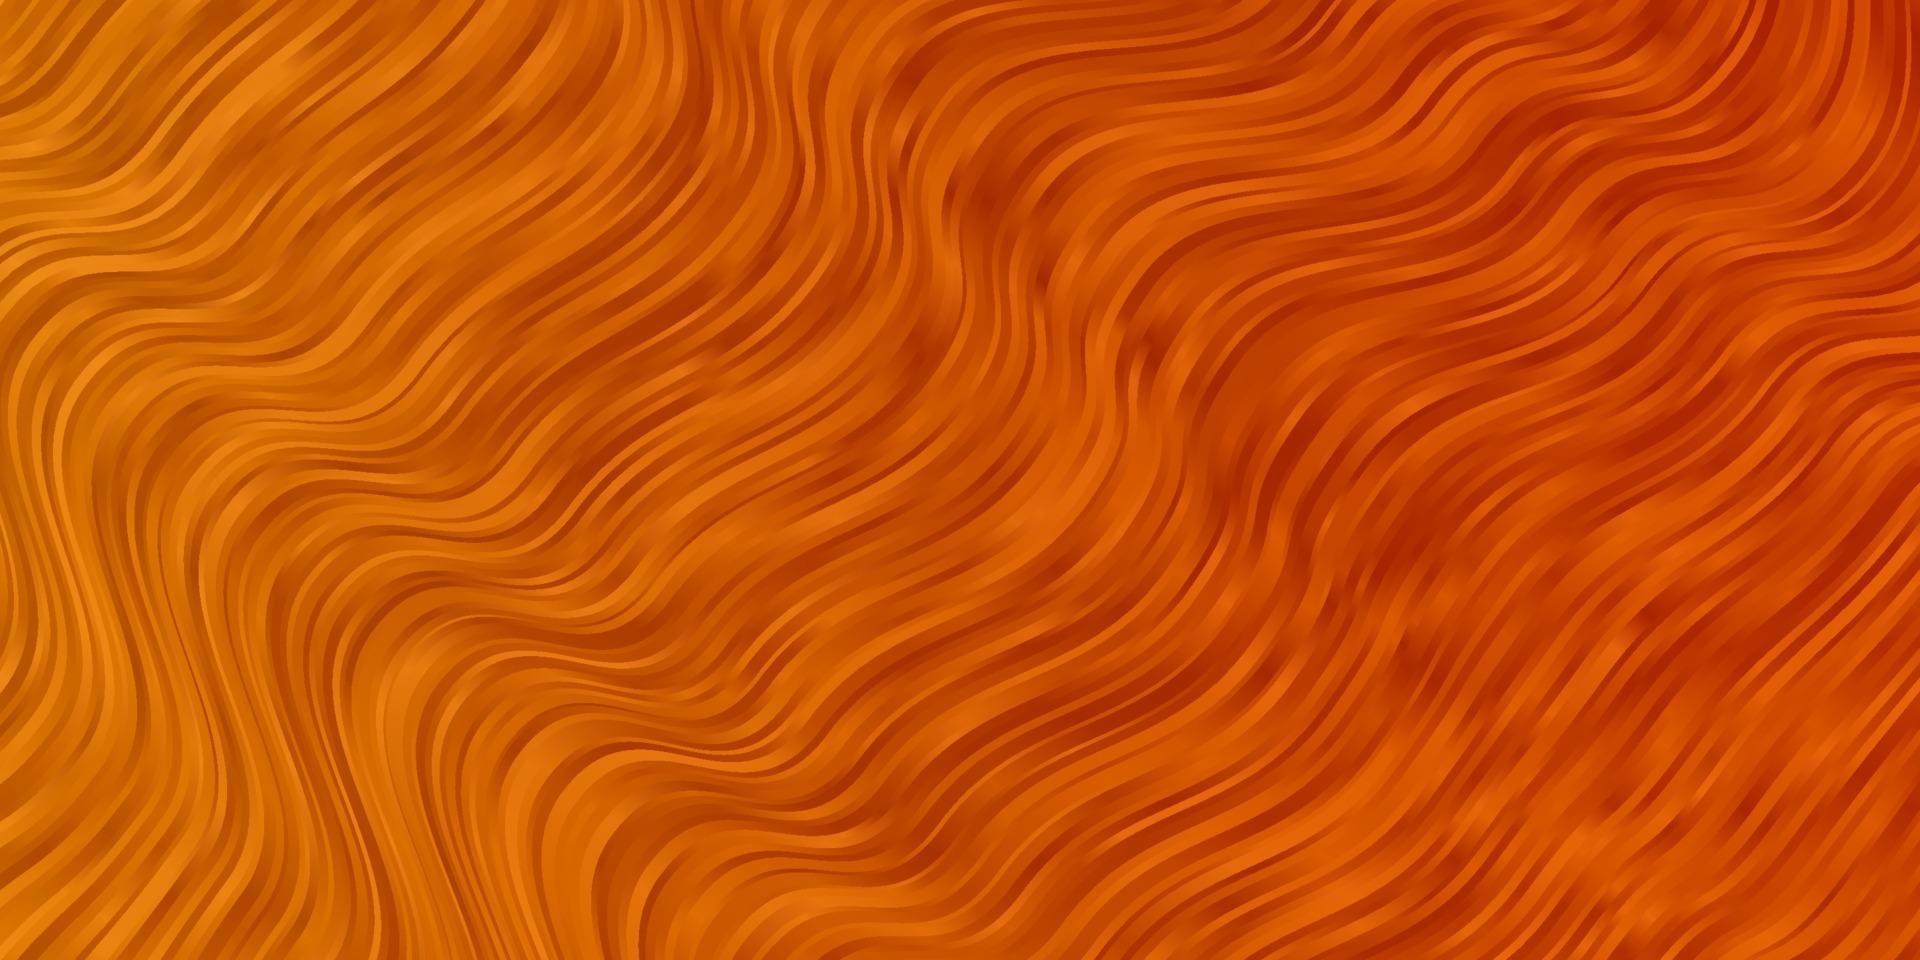 fundo laranja claro do vetor com curvas.